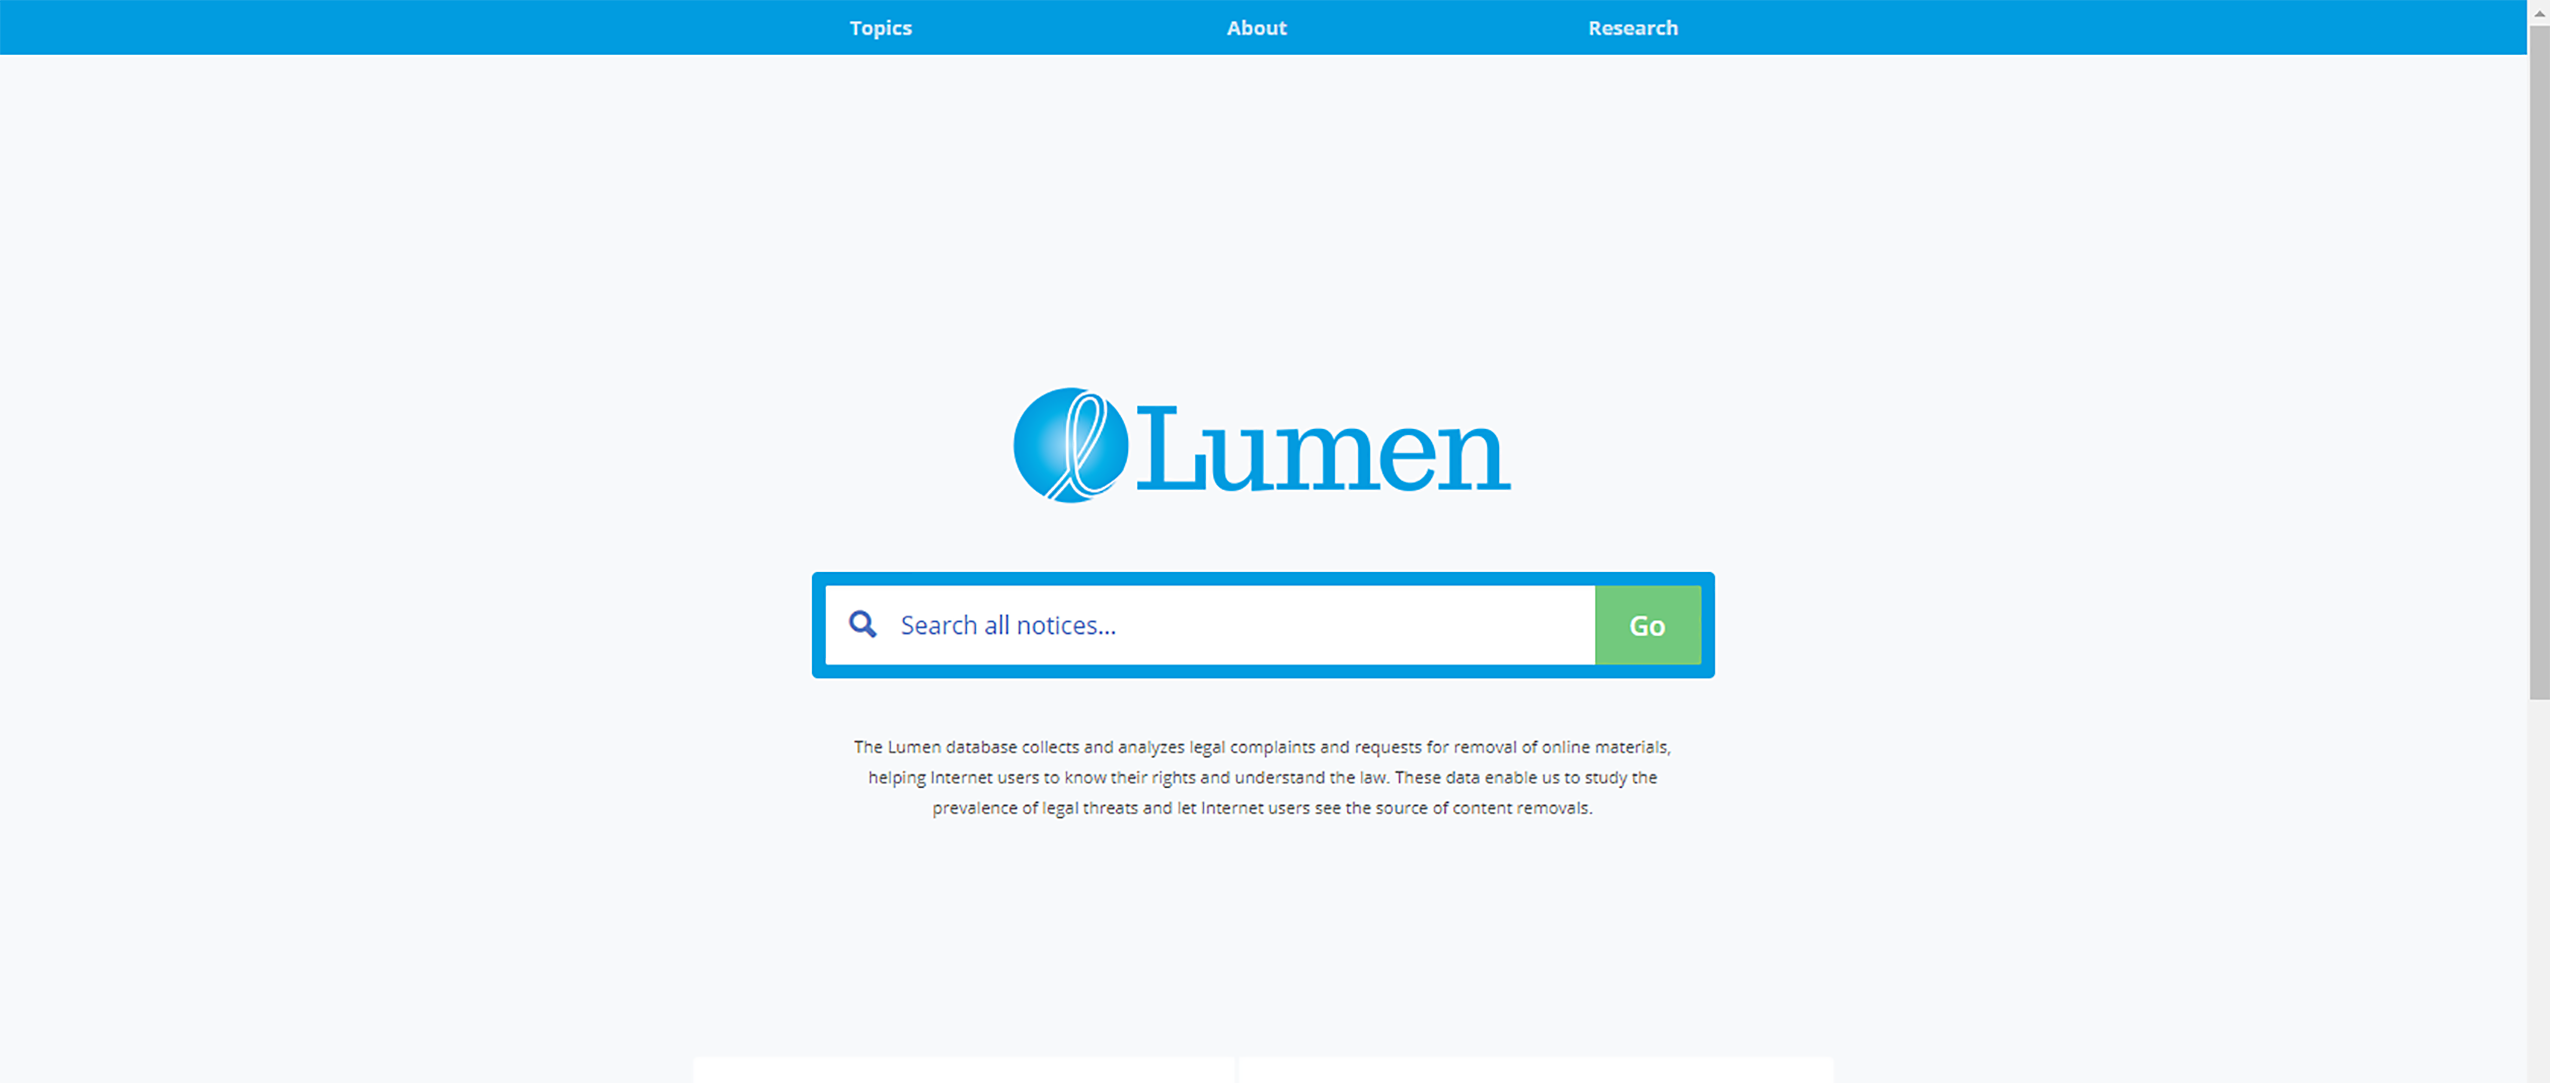 Lumen Homepage